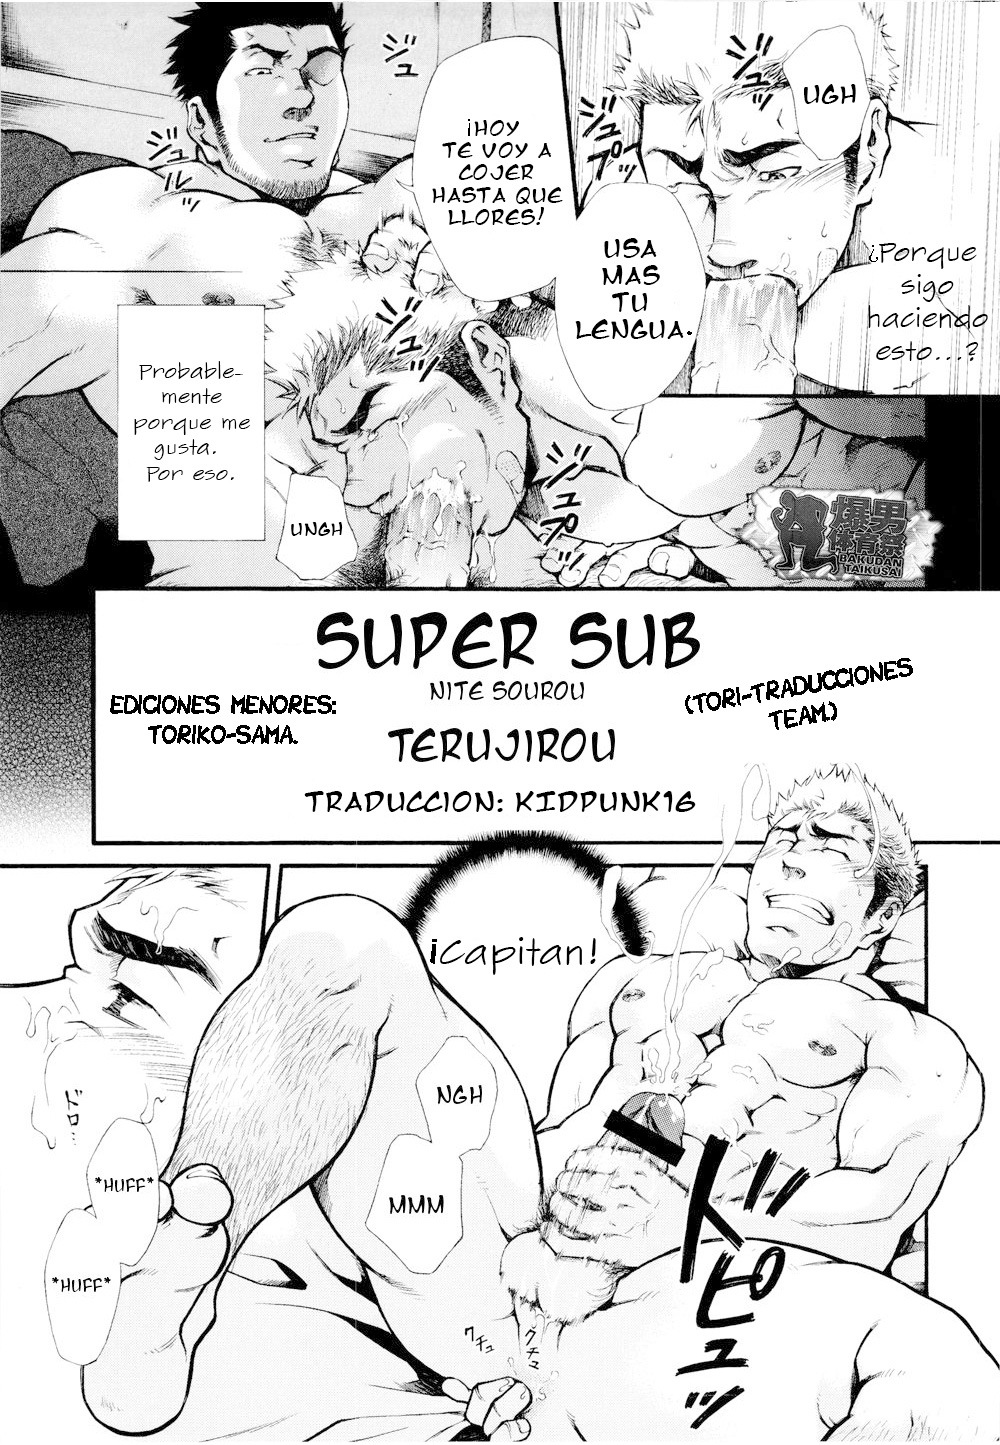 Terujirou 晃次郎 Super Sub